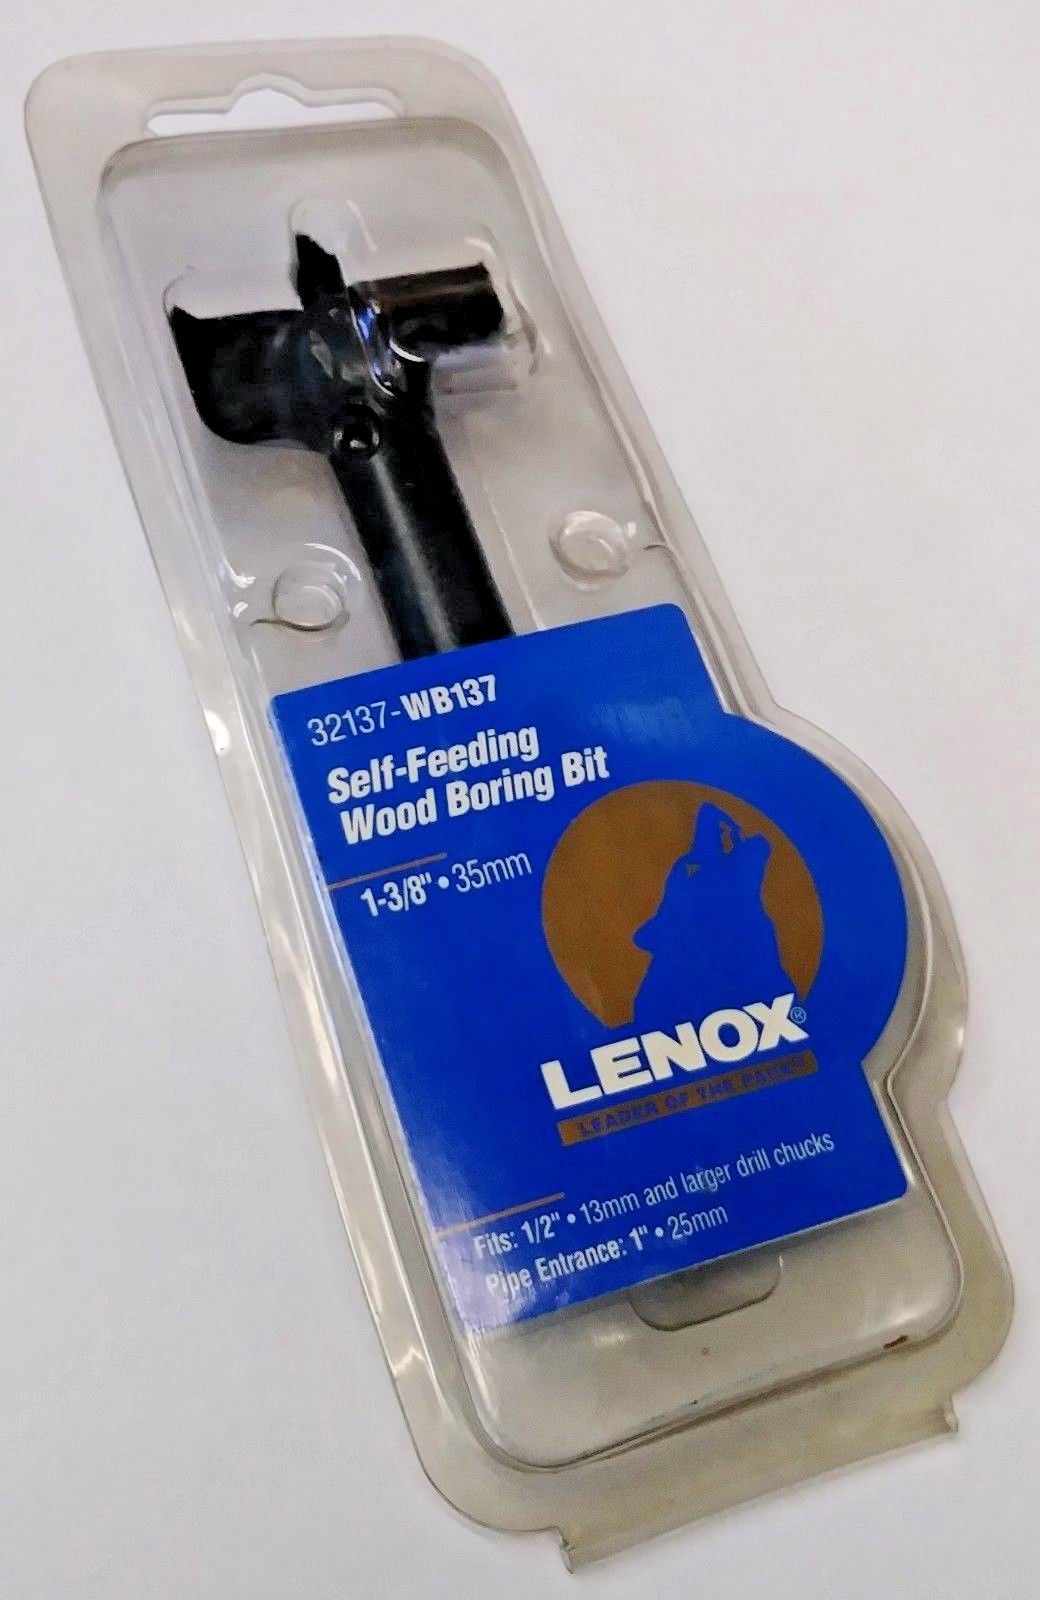 Lenox 32137-WB137 1-3/8" x 4-1/8"  Self-Feeding Wood Boring Bit USA